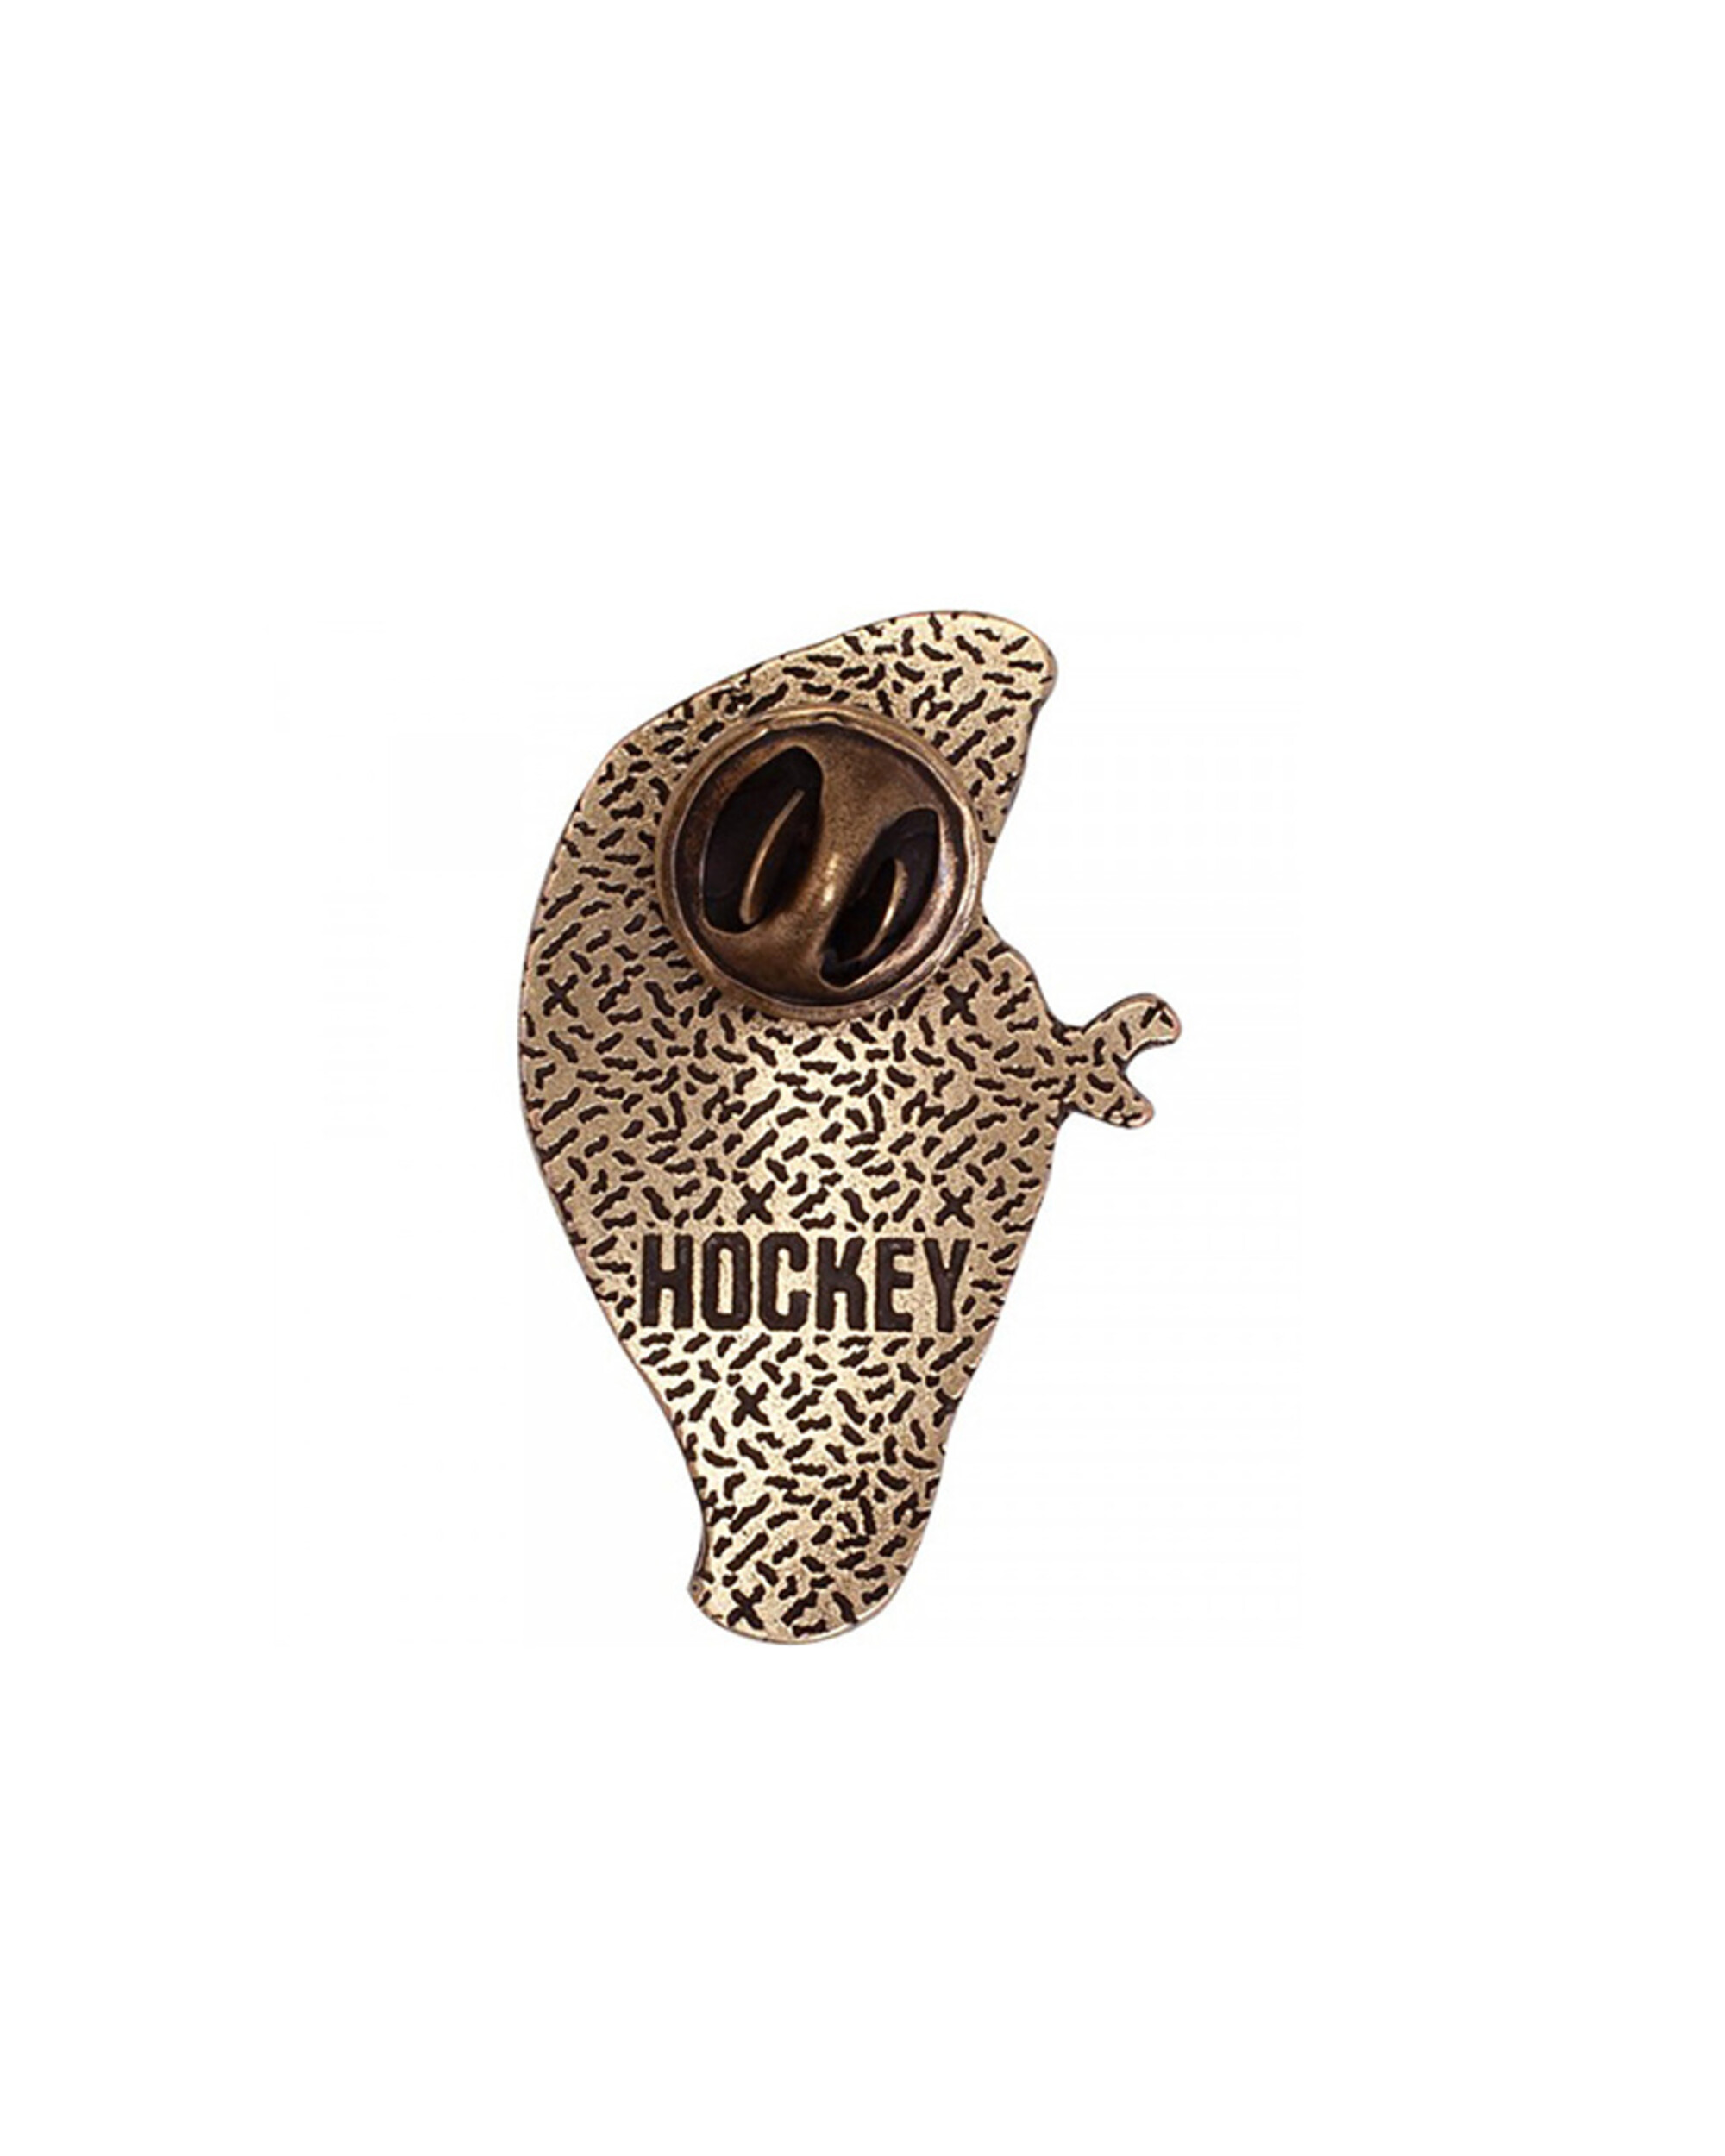 Hockey Snake Pin